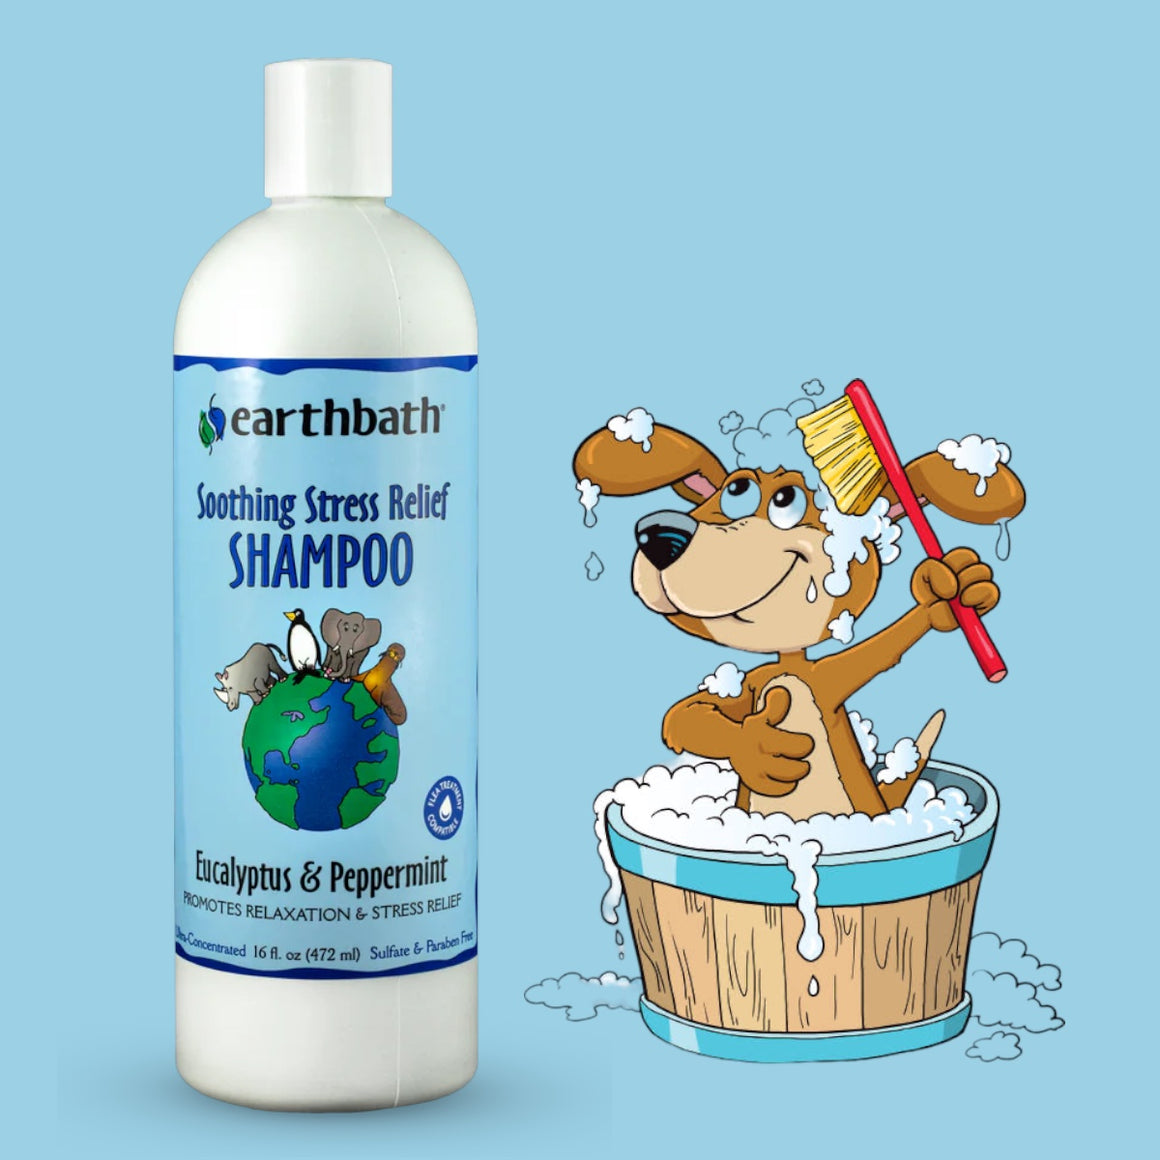 Dog Shampoo Earthbath Eucalyptus & Peppermint 472ml - Soothing Stress Relief